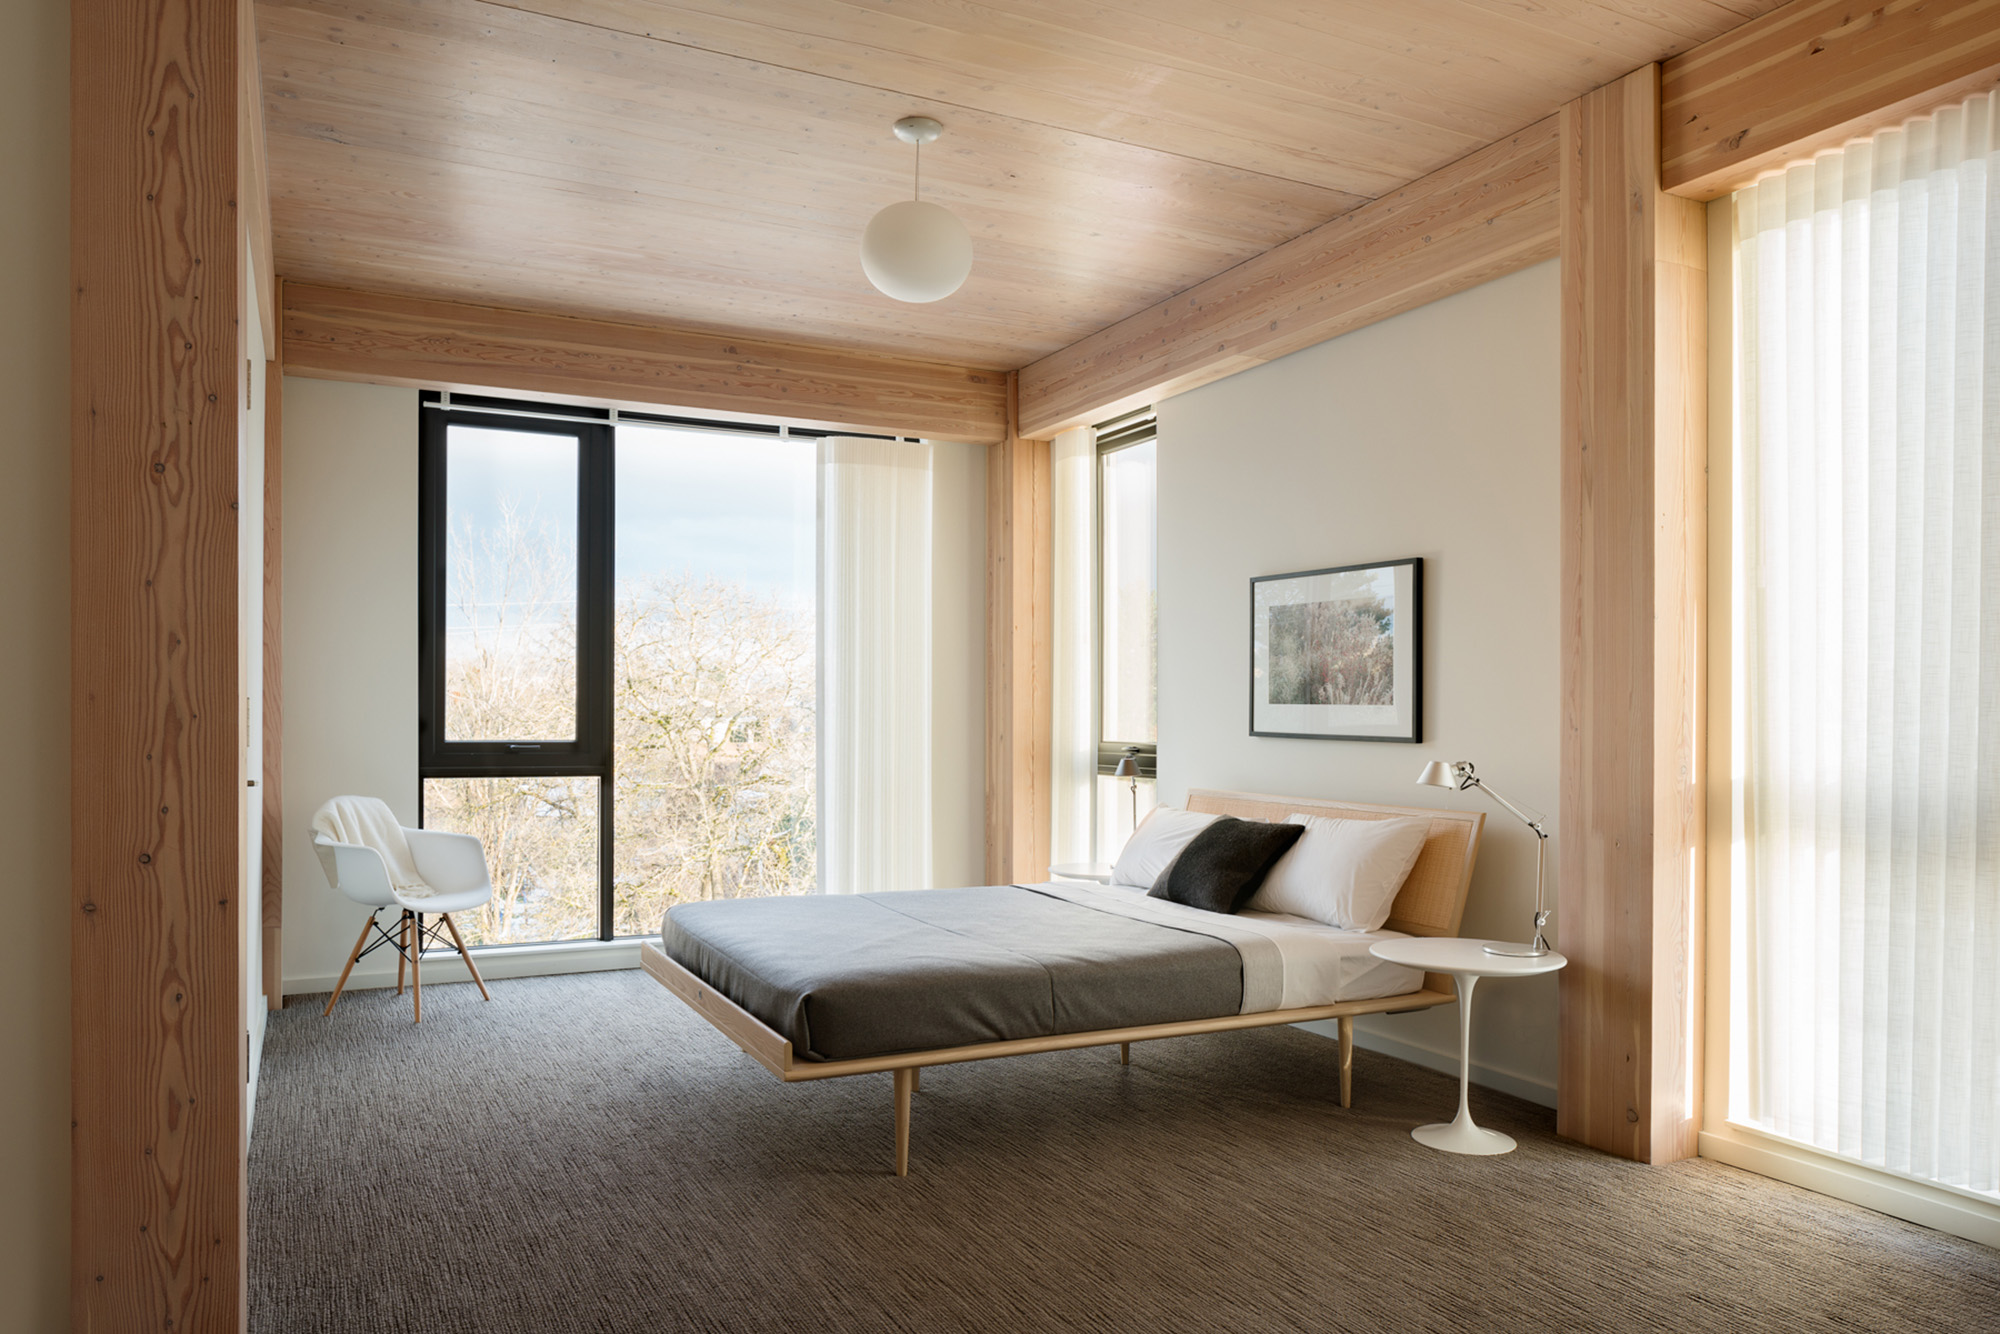 Mass timber bedroom